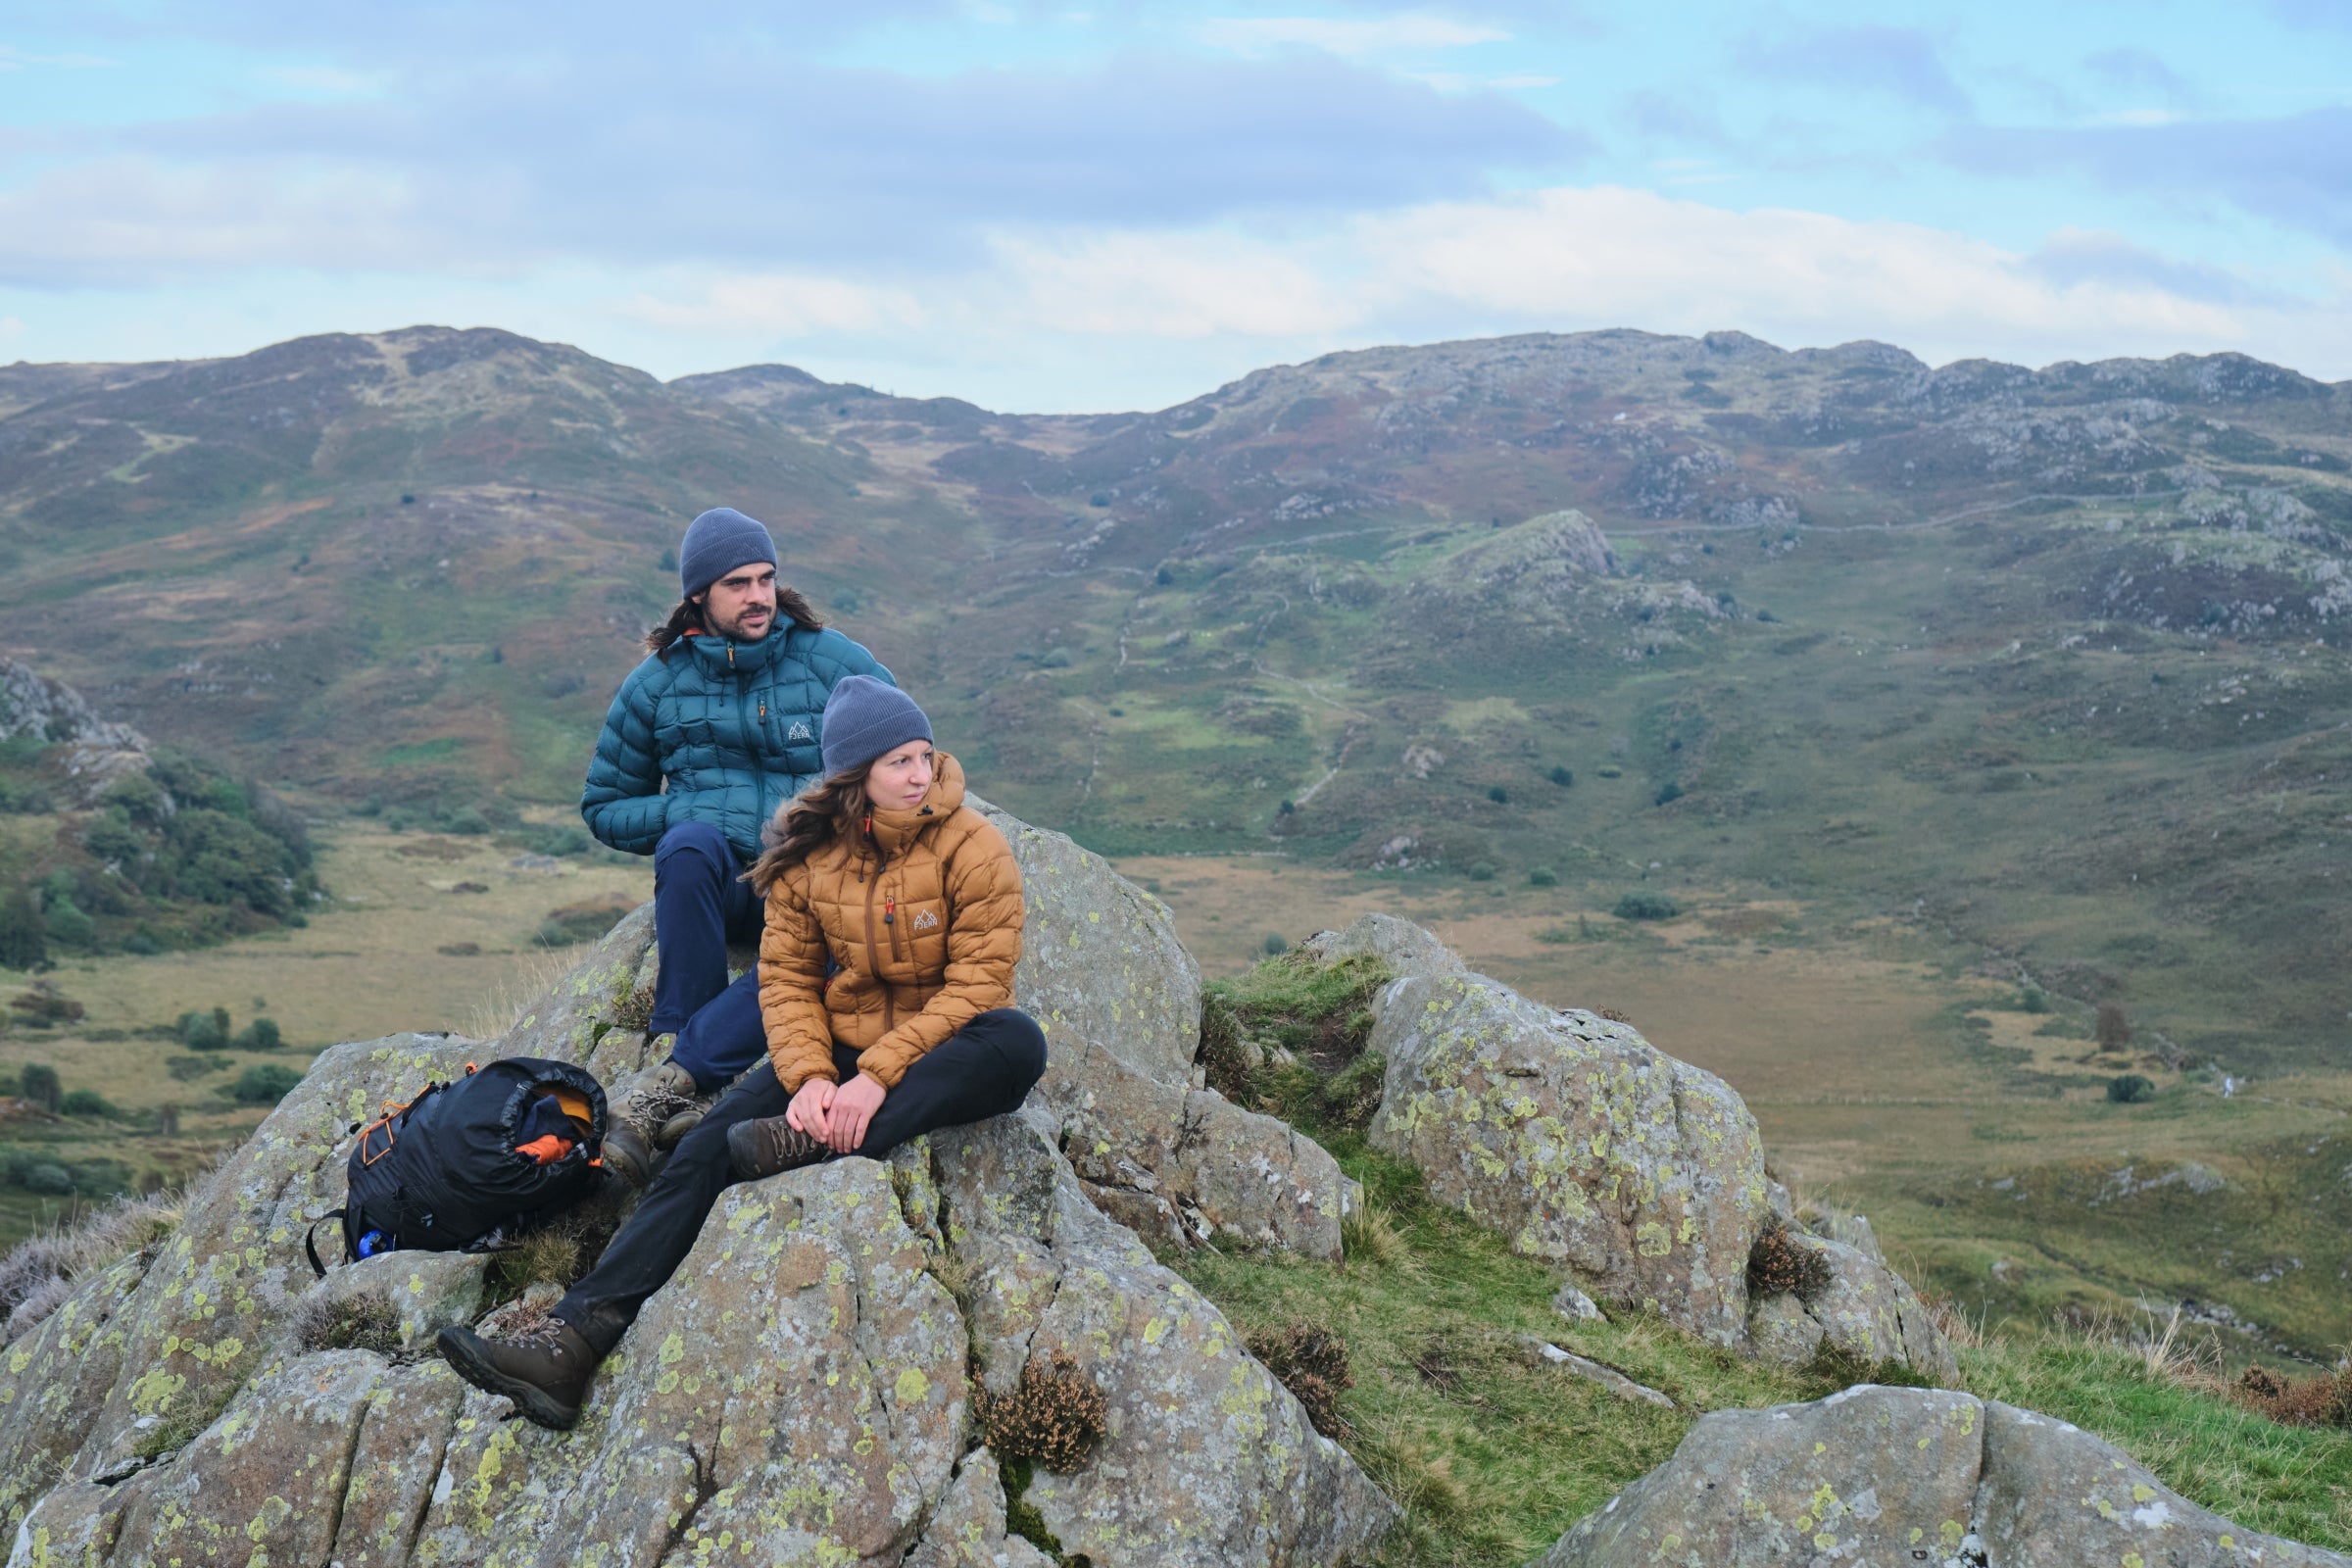 Fjern Eldur Jackets on a rocky rest stop in a vast hilly landscape